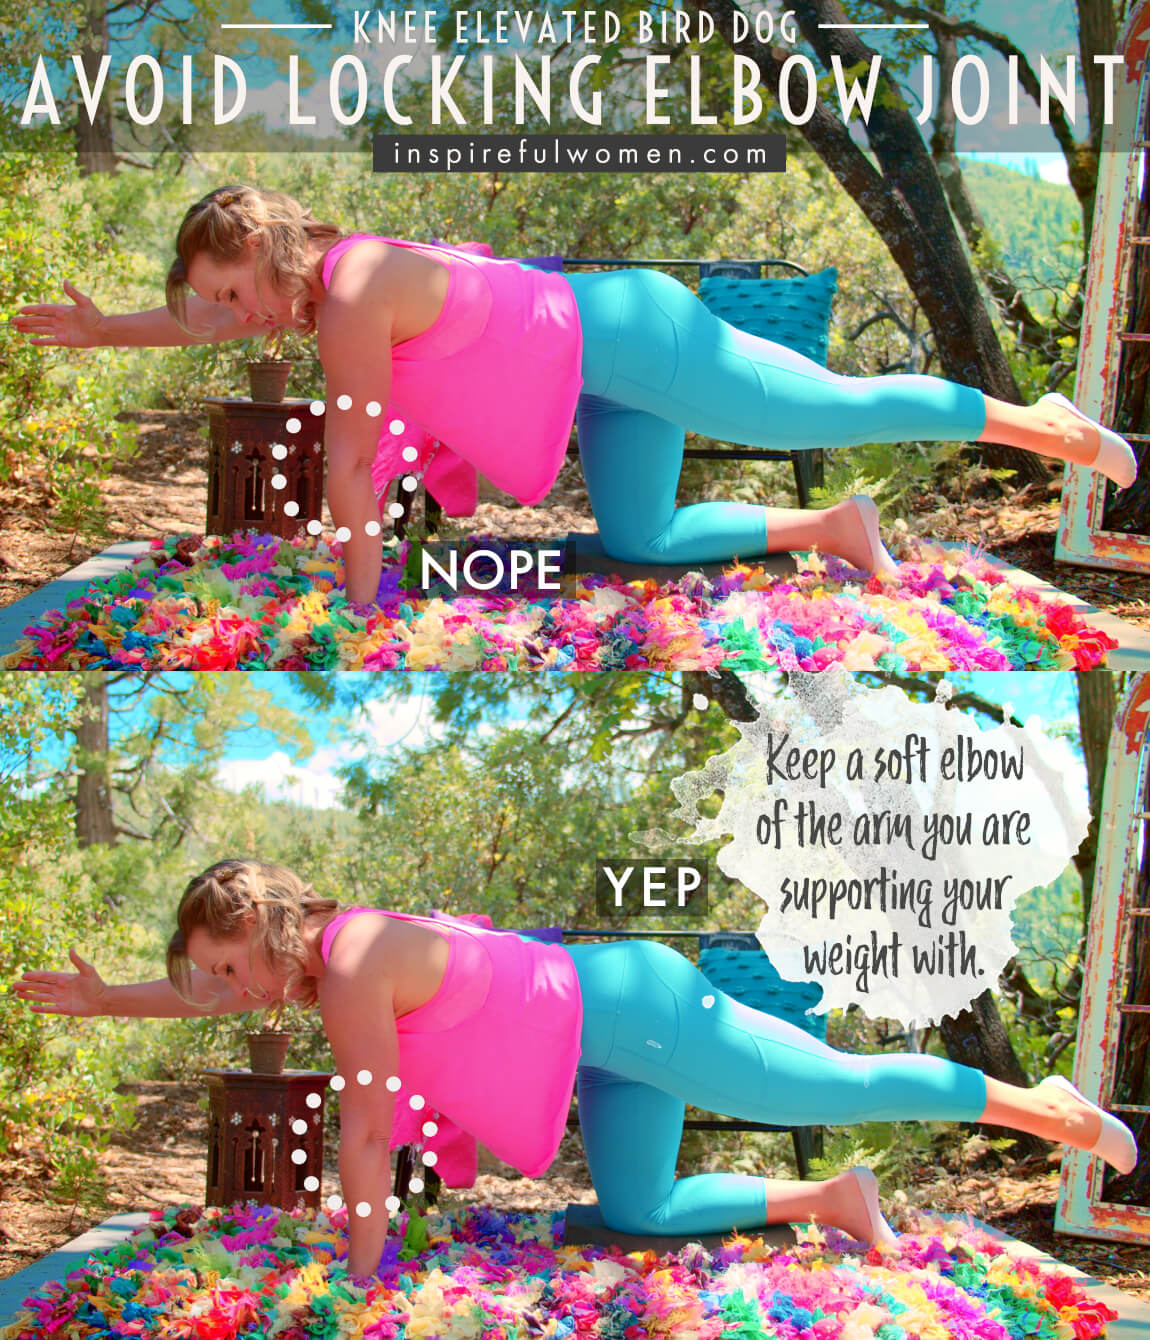 avoid-locking-elbow-joint-knee-elevated-bird-dog-multifidus-core-exercise-proper-form